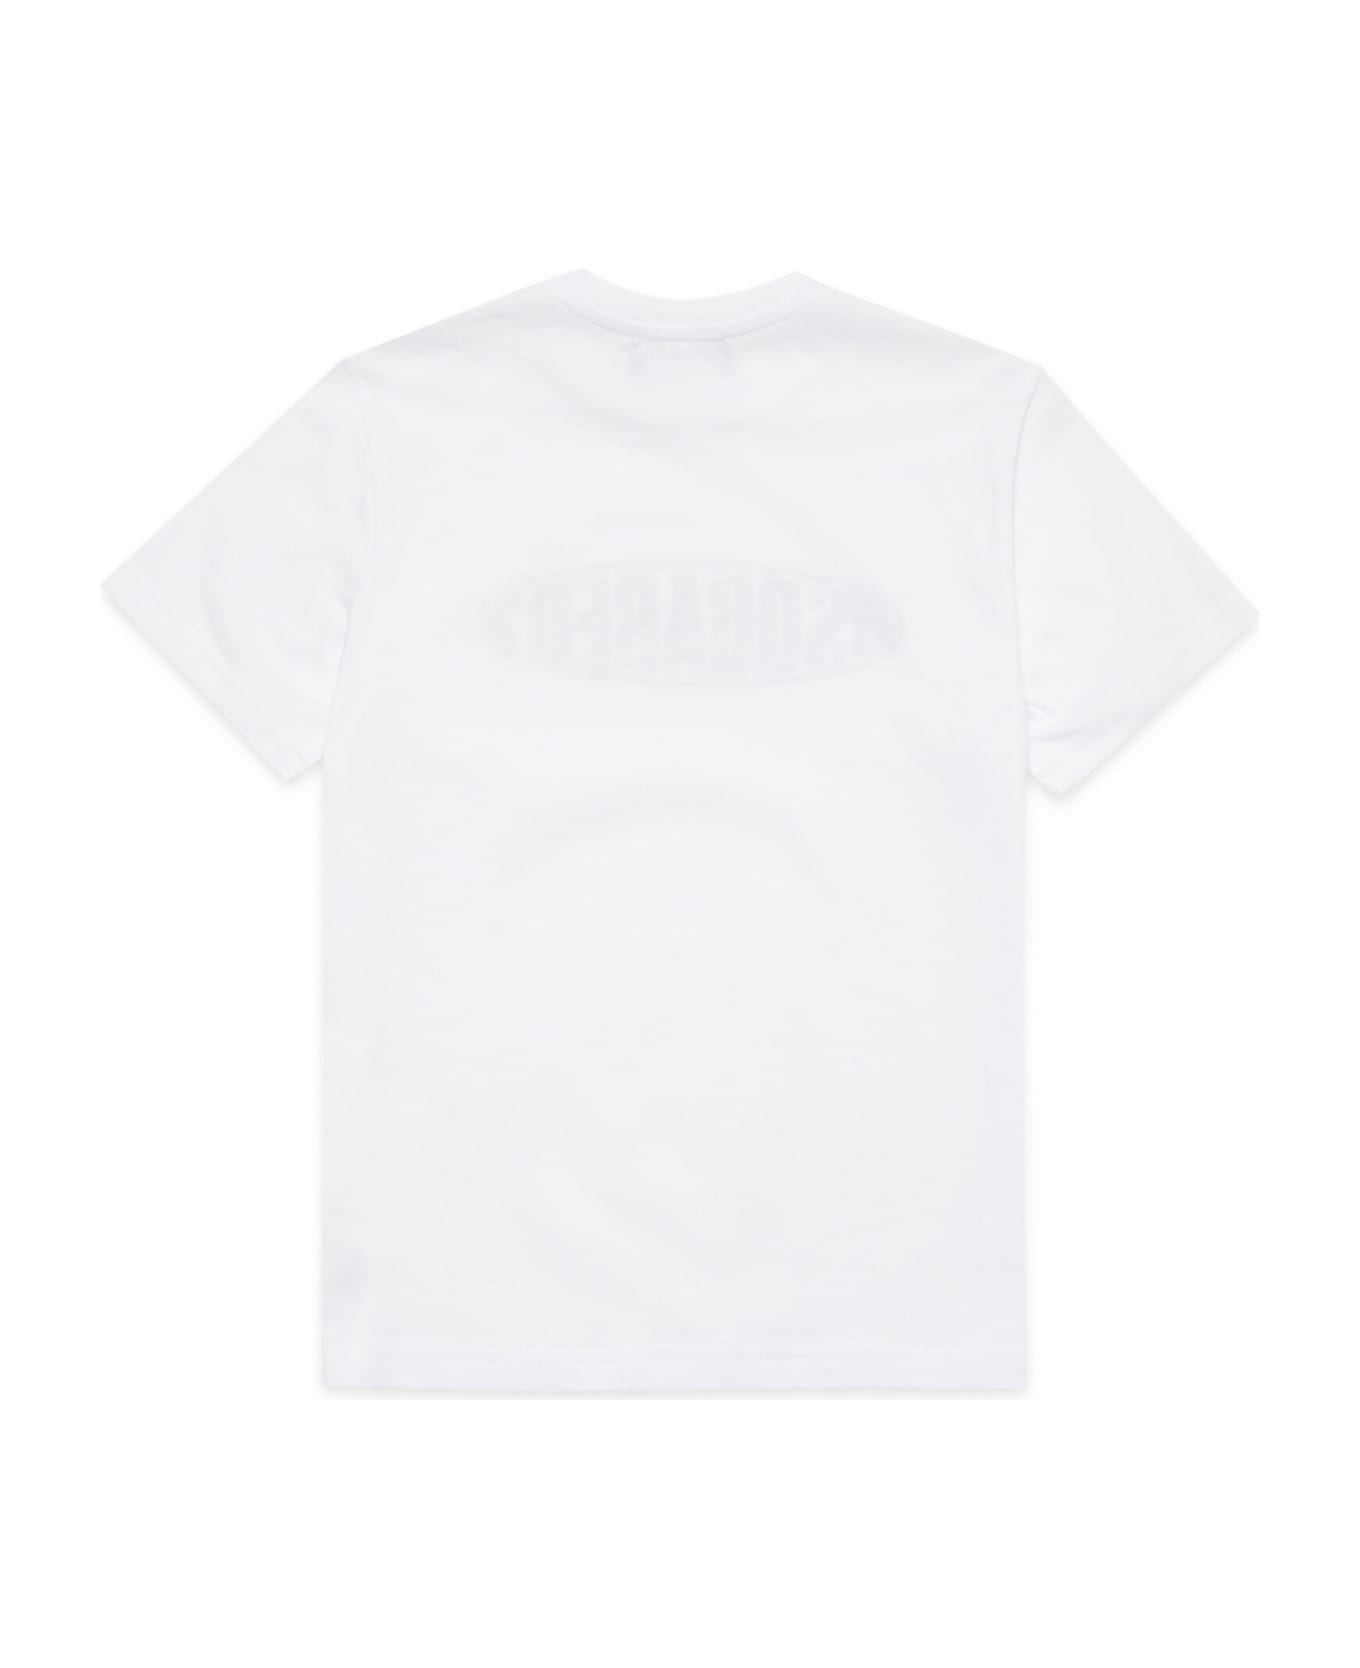 Dsquared2 D2t1016u Relax T-shirt Dsquared Surf Branded T-shirt - Bianco